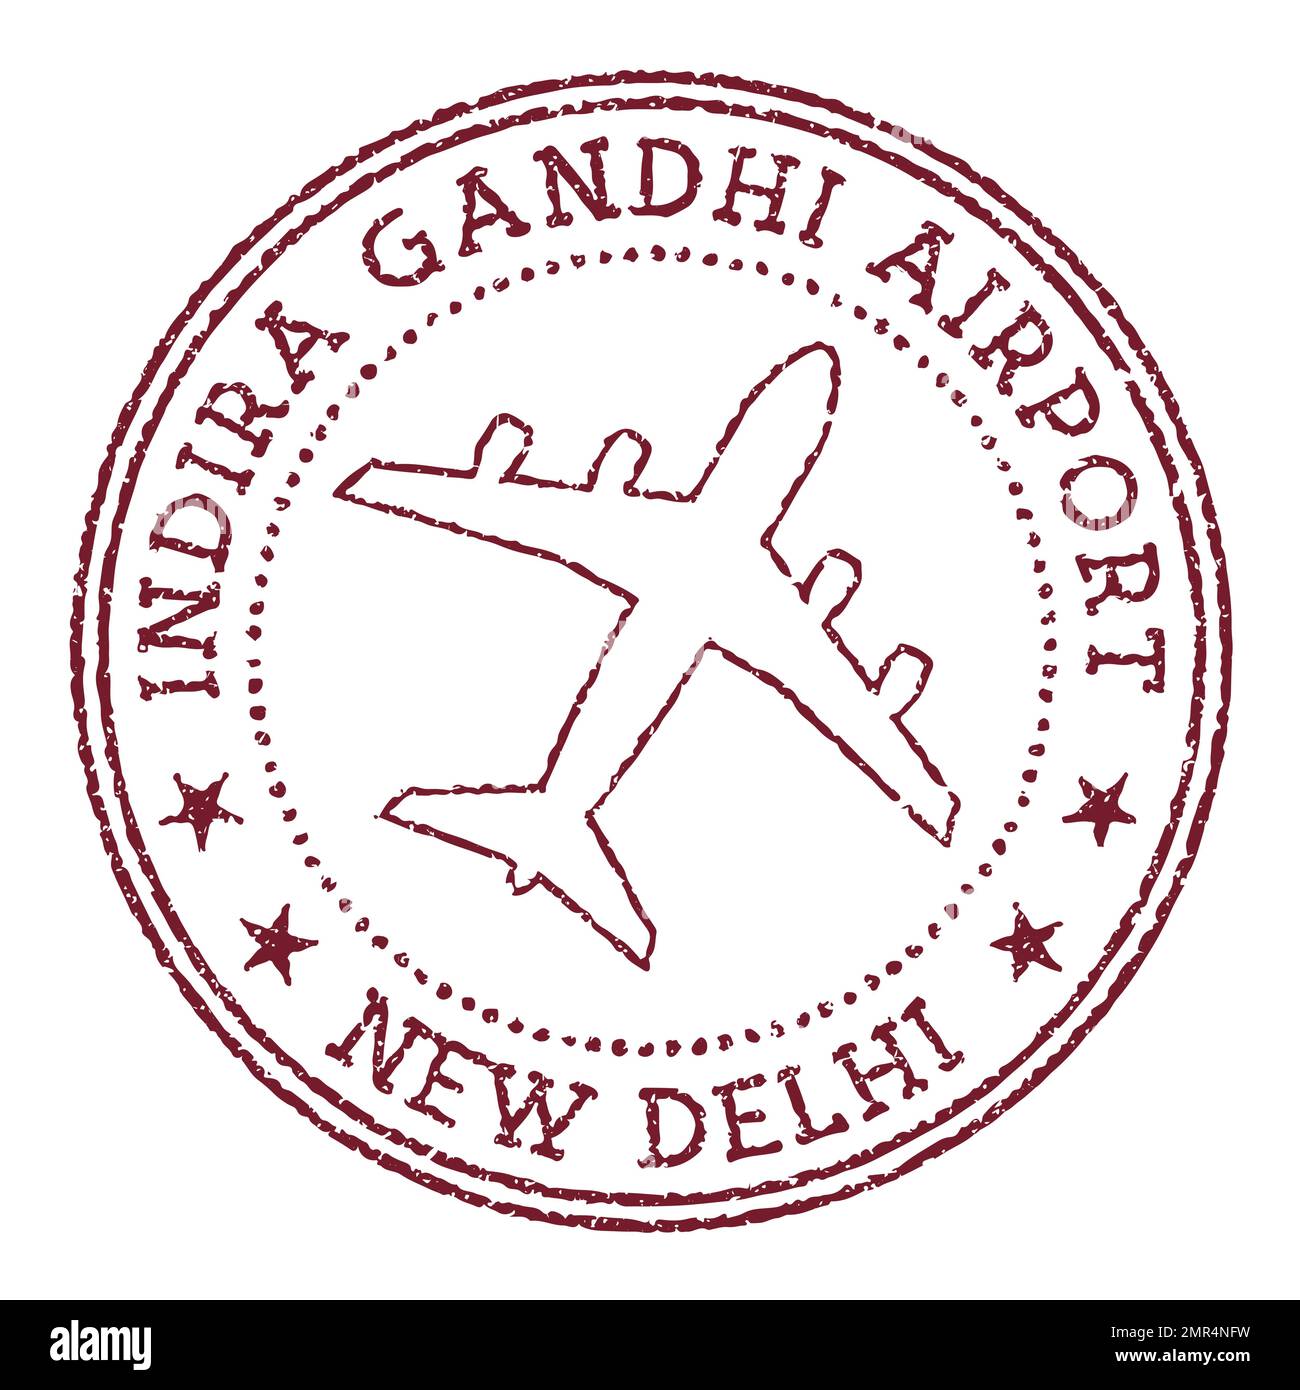 Indira Gandhi Airport New Delhi stamp. Airport of New Delhi round logo. Vector illustration. Stock Vector